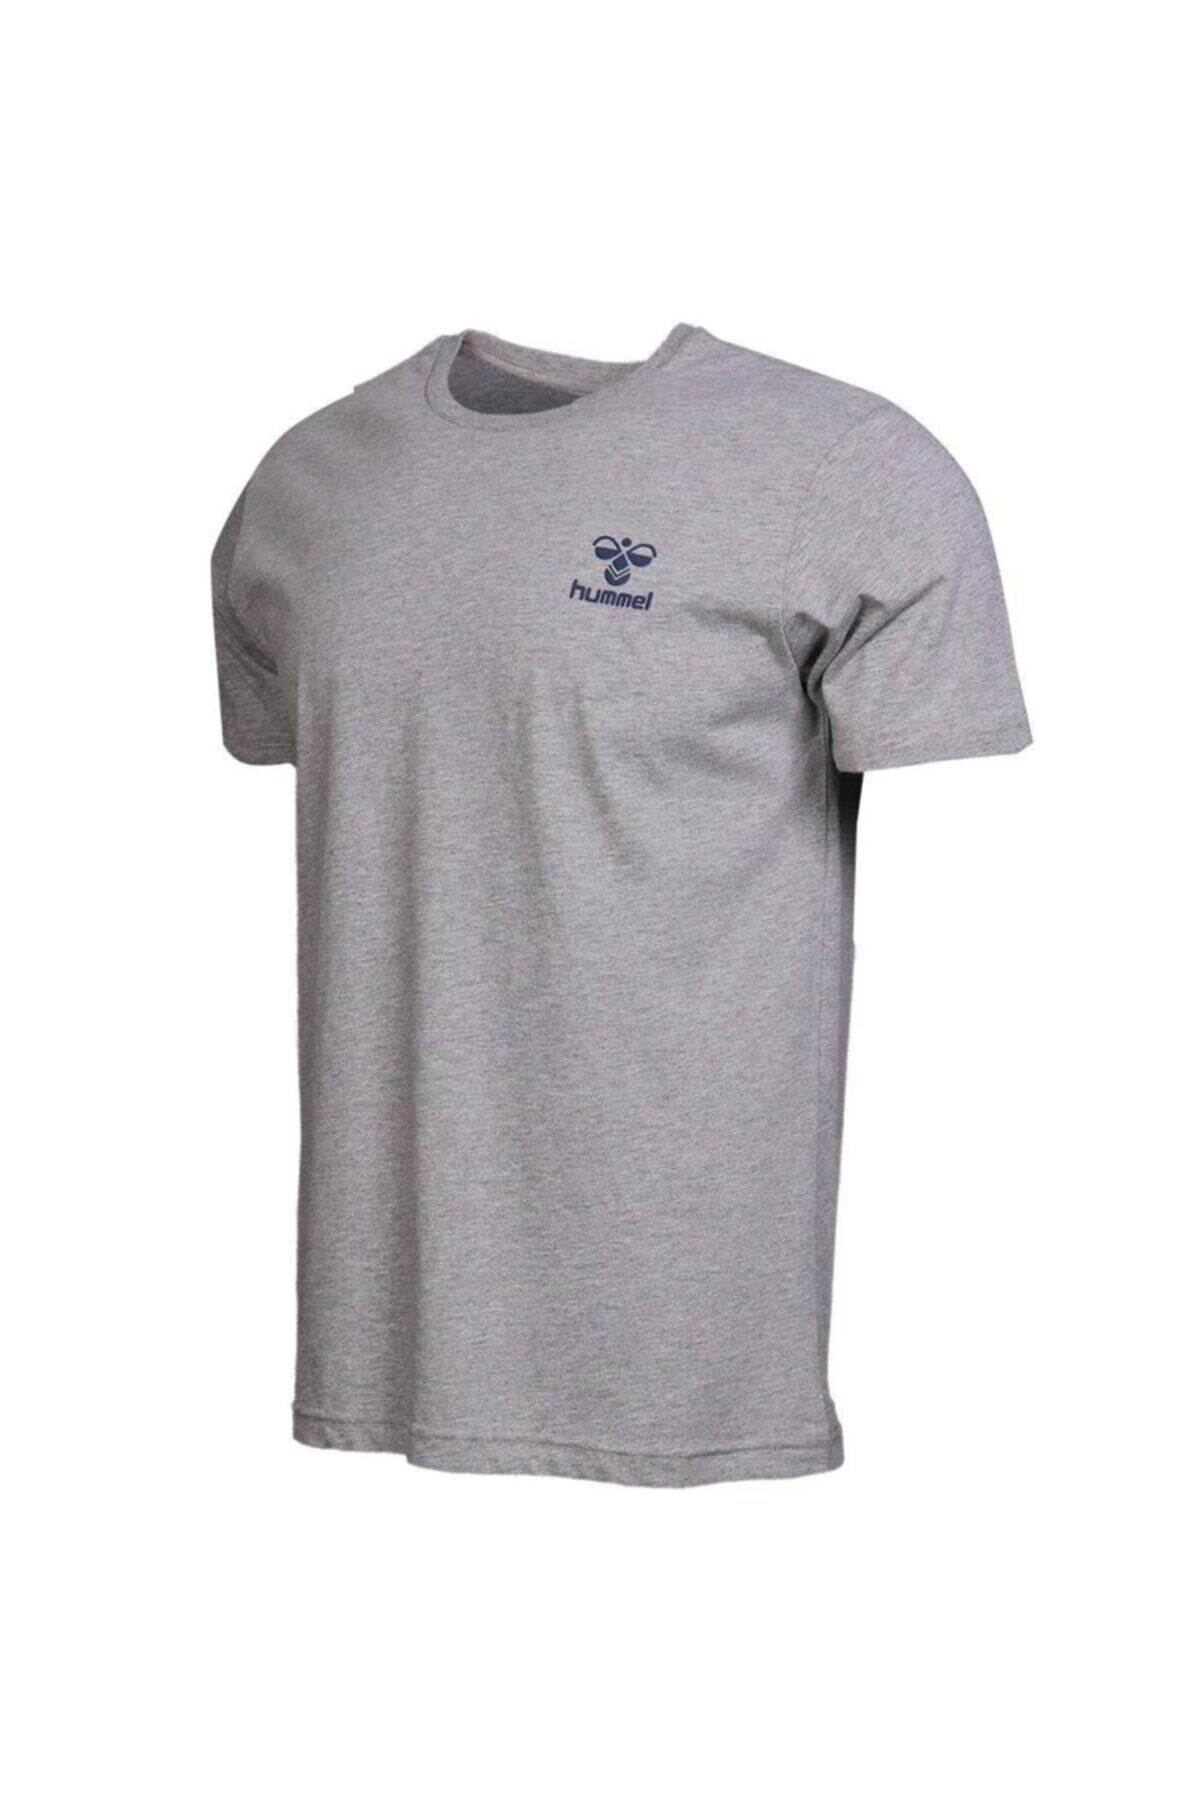 HUMMEL Sport Trendyol - - - T-Shirt Figurbetont Grau